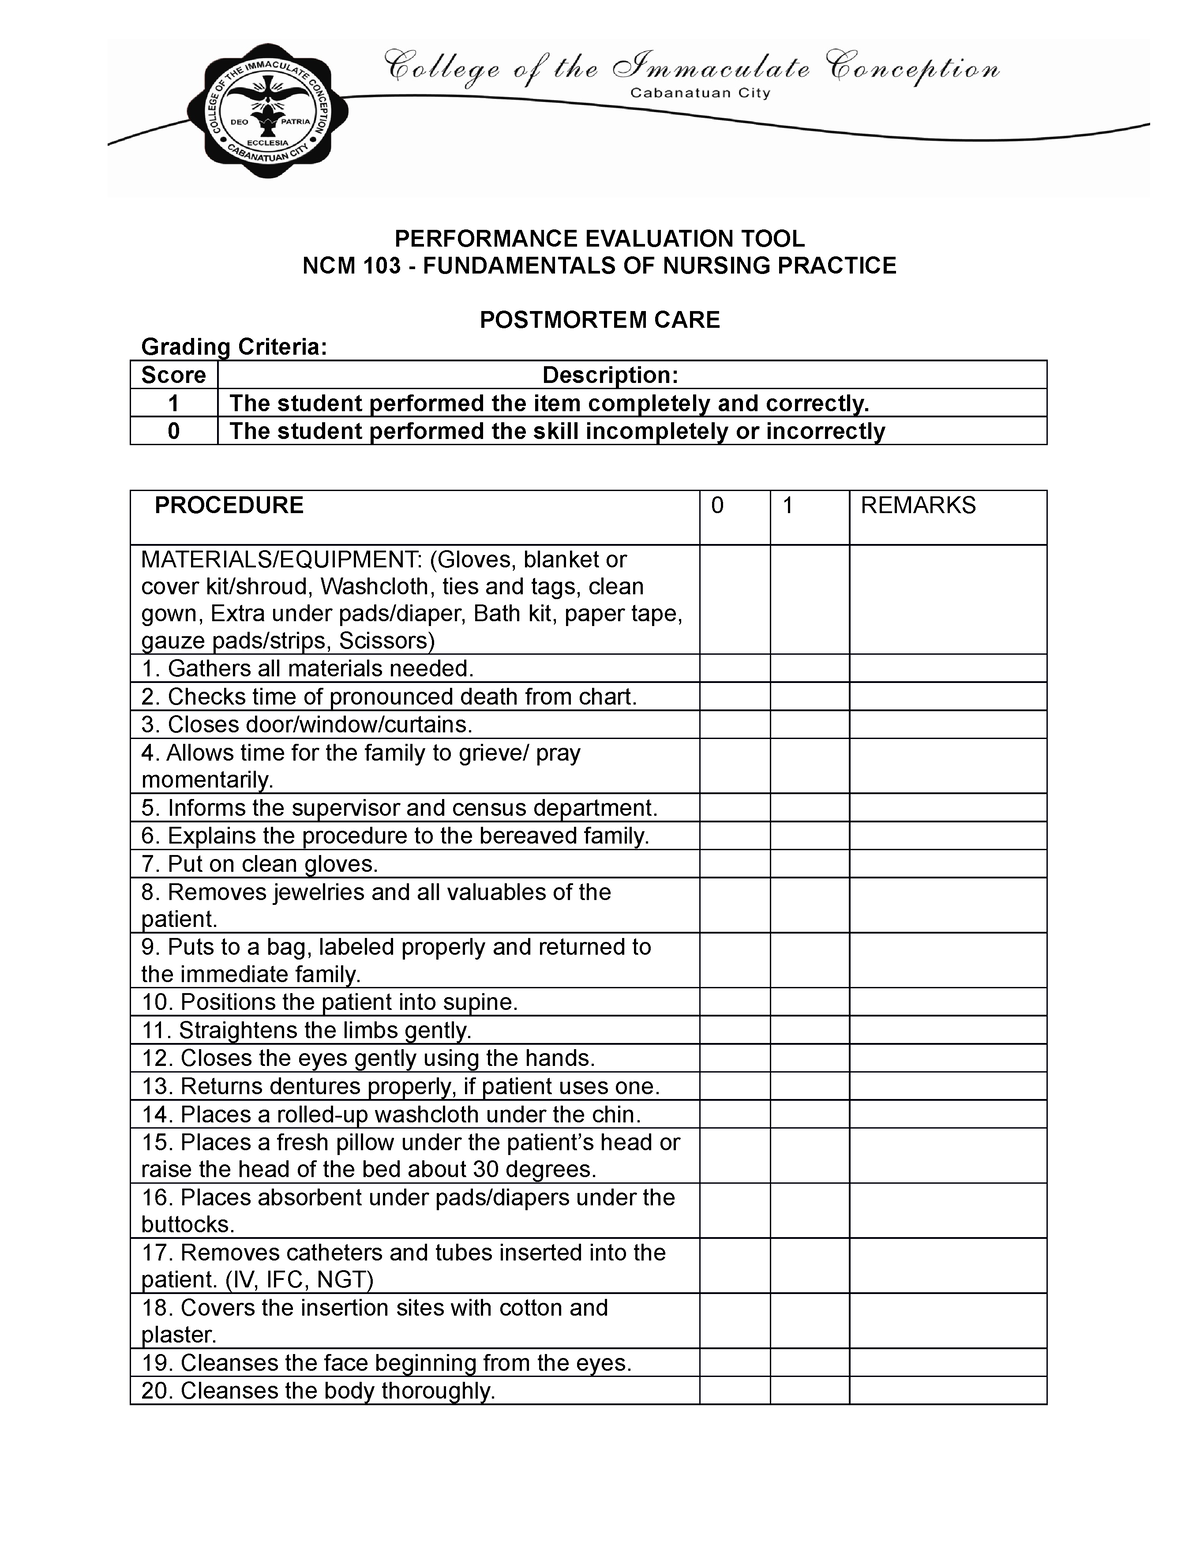 Post Mortem Care Checklist Performance Evaluation Tool Ncm Fundamentals Of Nursing